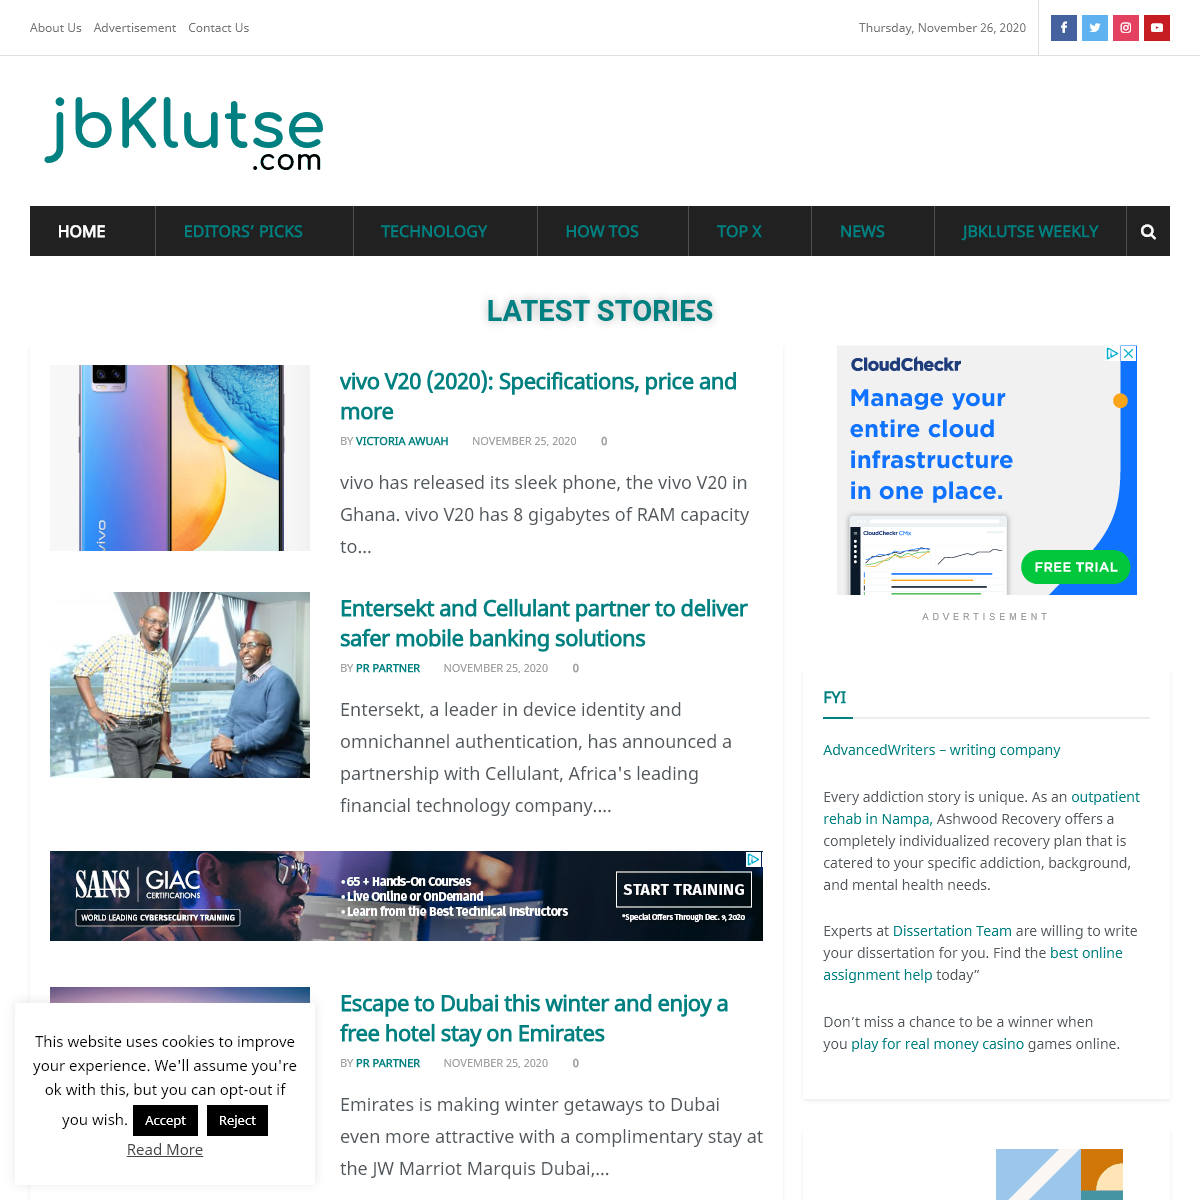 A complete backup of jbklutse.com